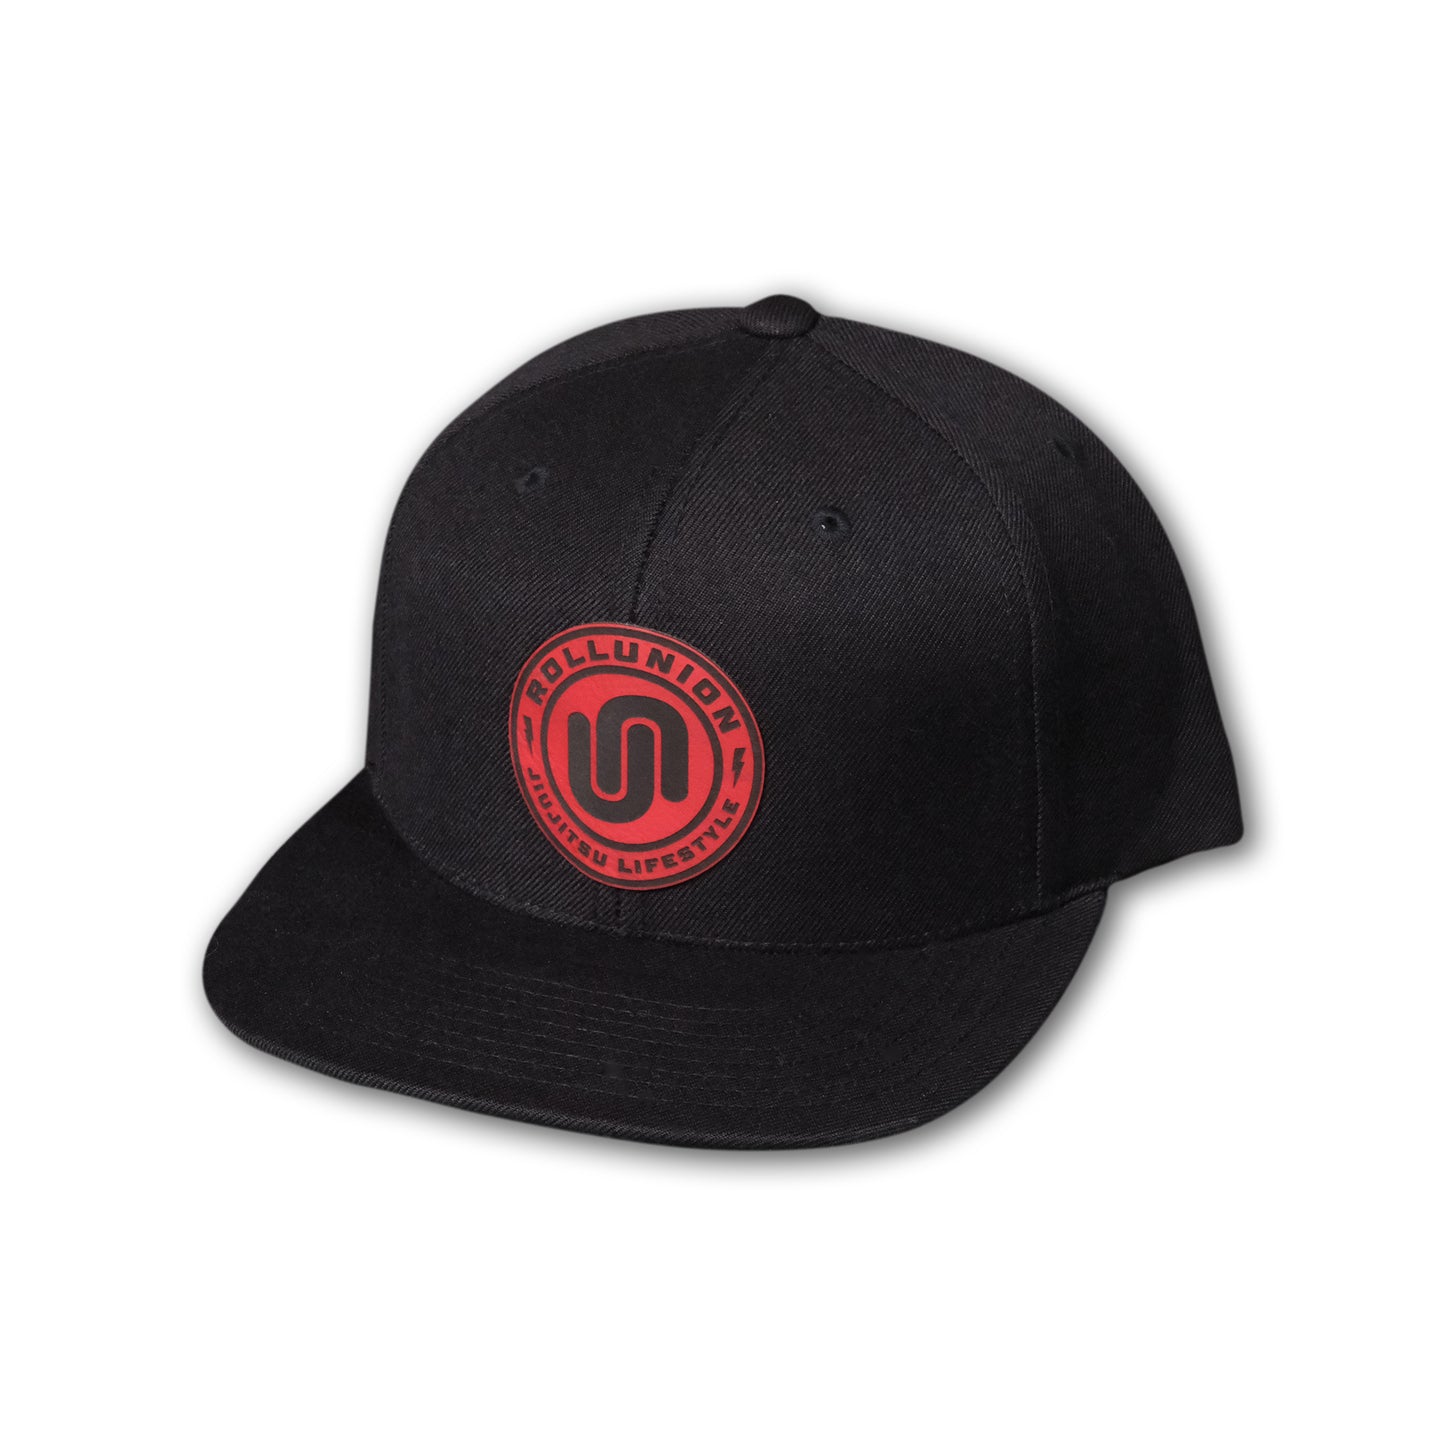 BLACK/RED SNAPBACK CAP